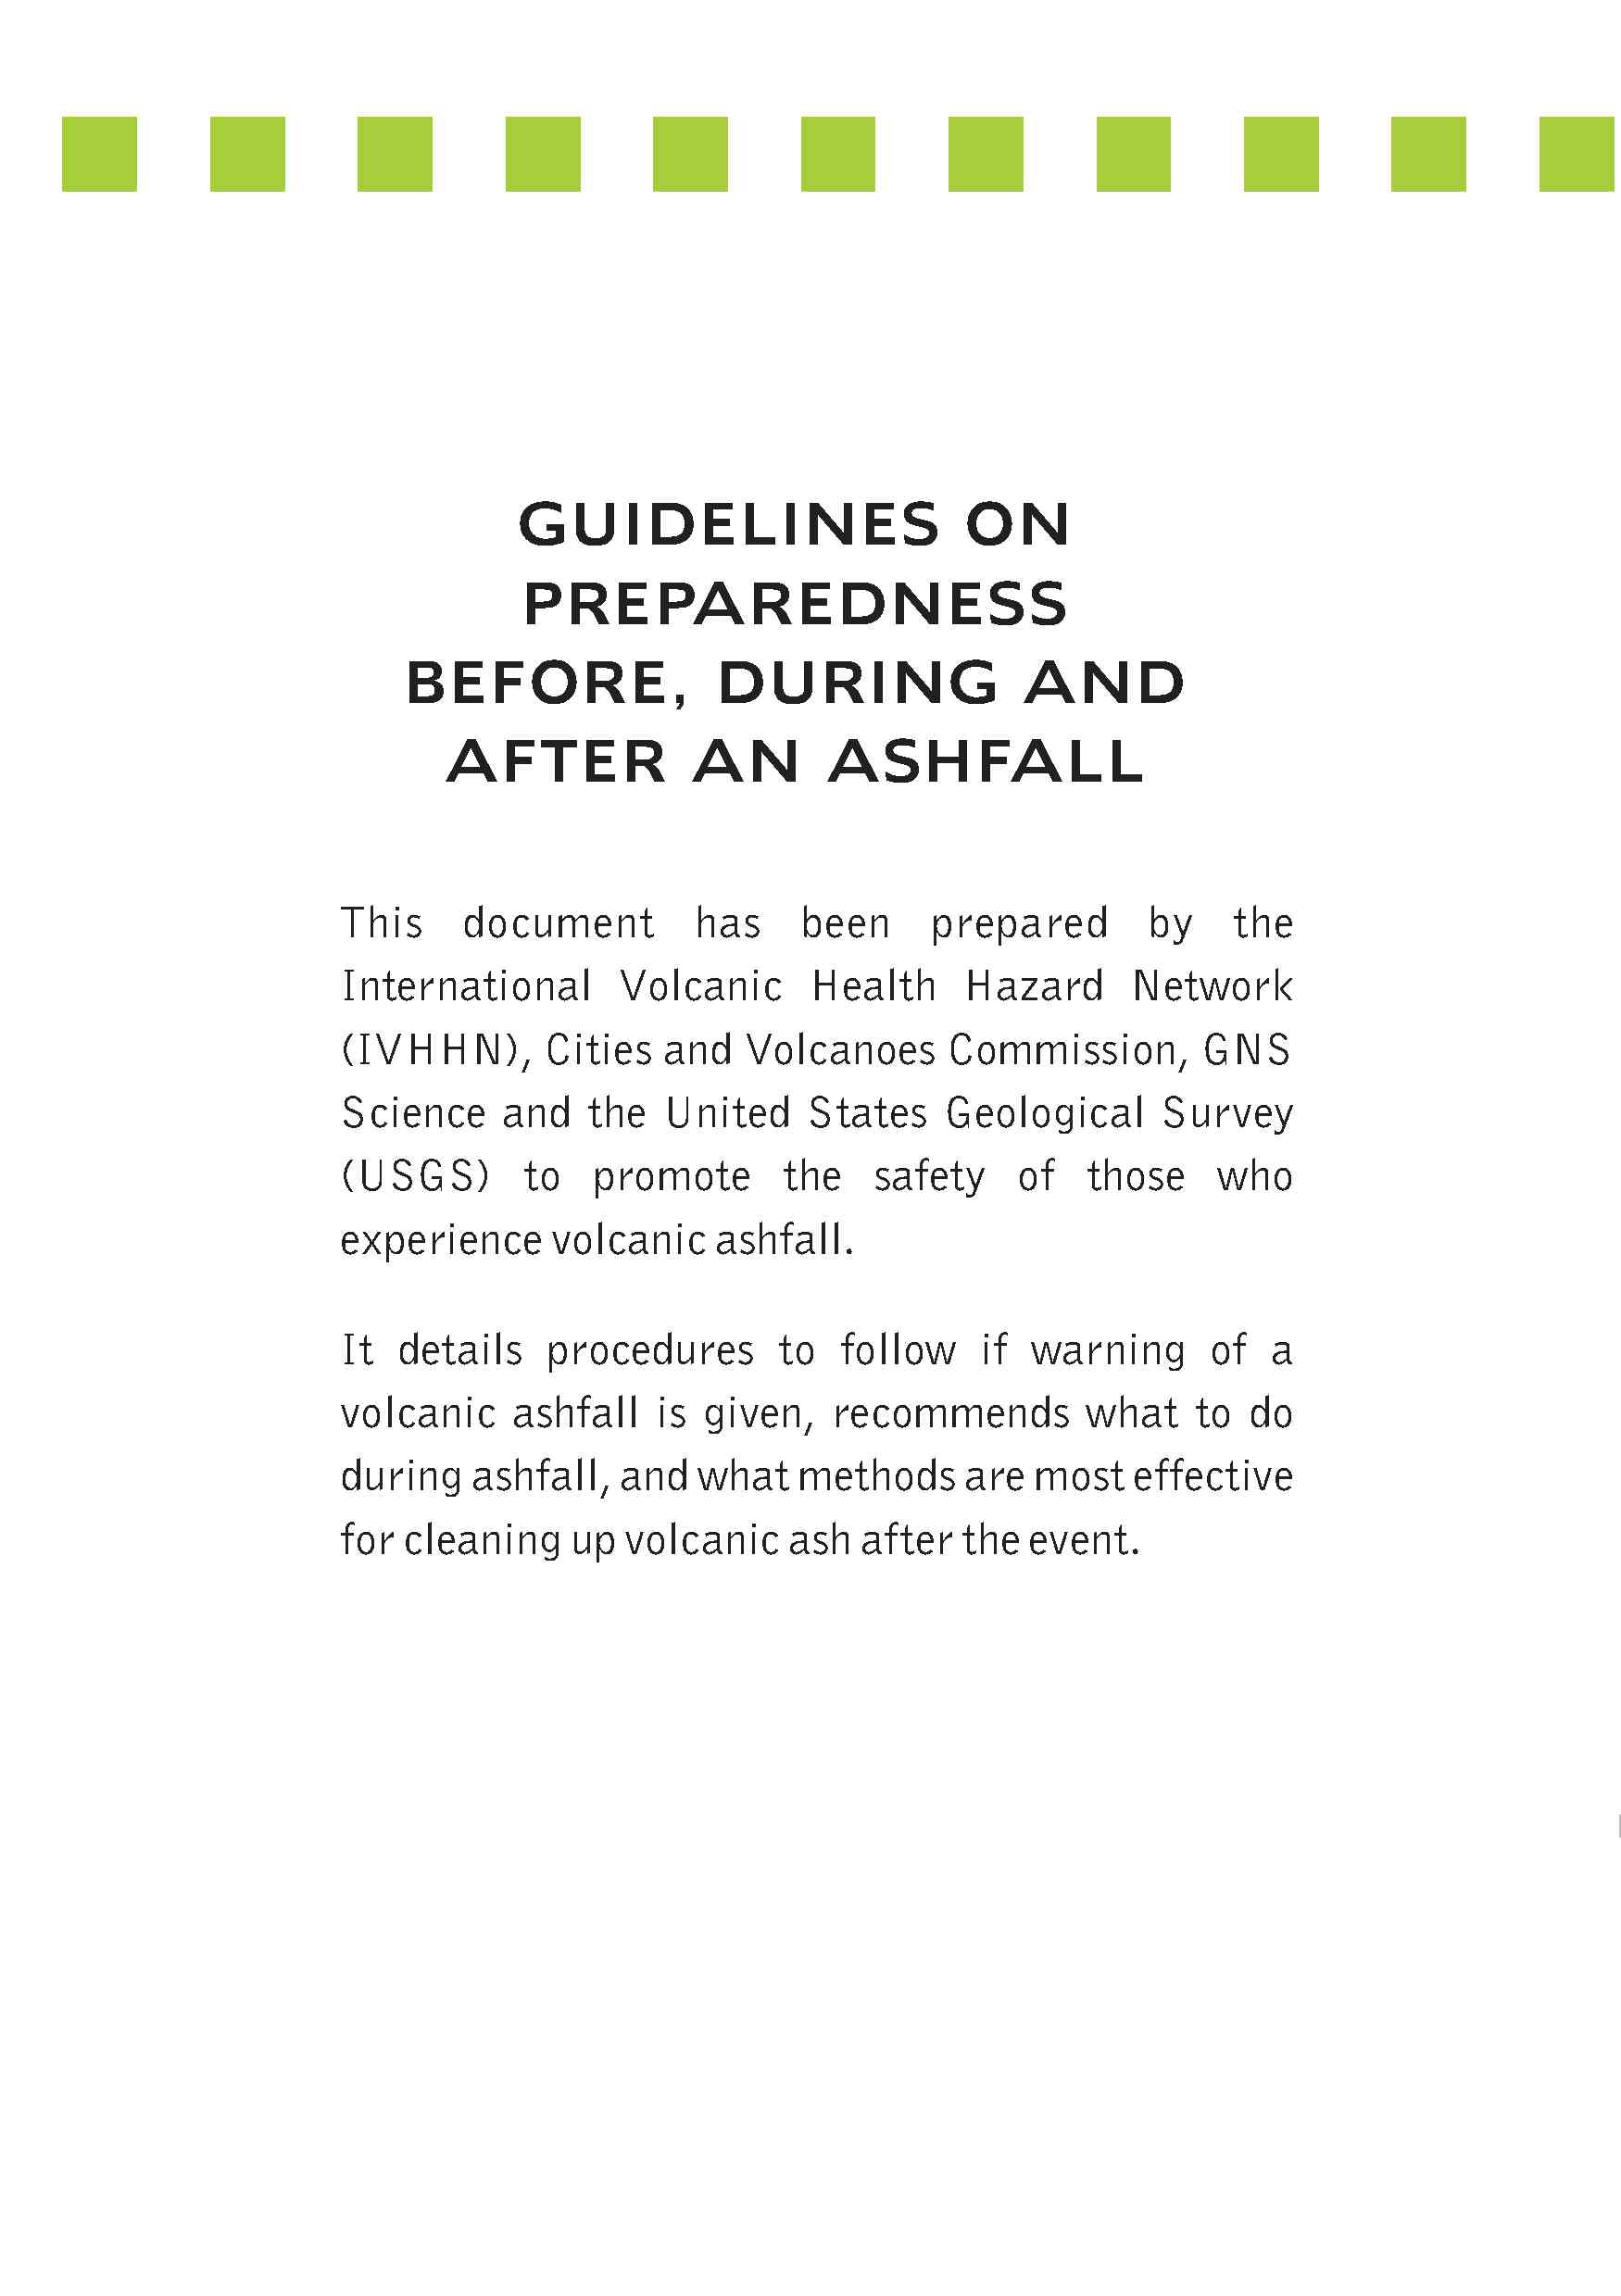 Preparedness_Guidelines_English_WEB (1)2